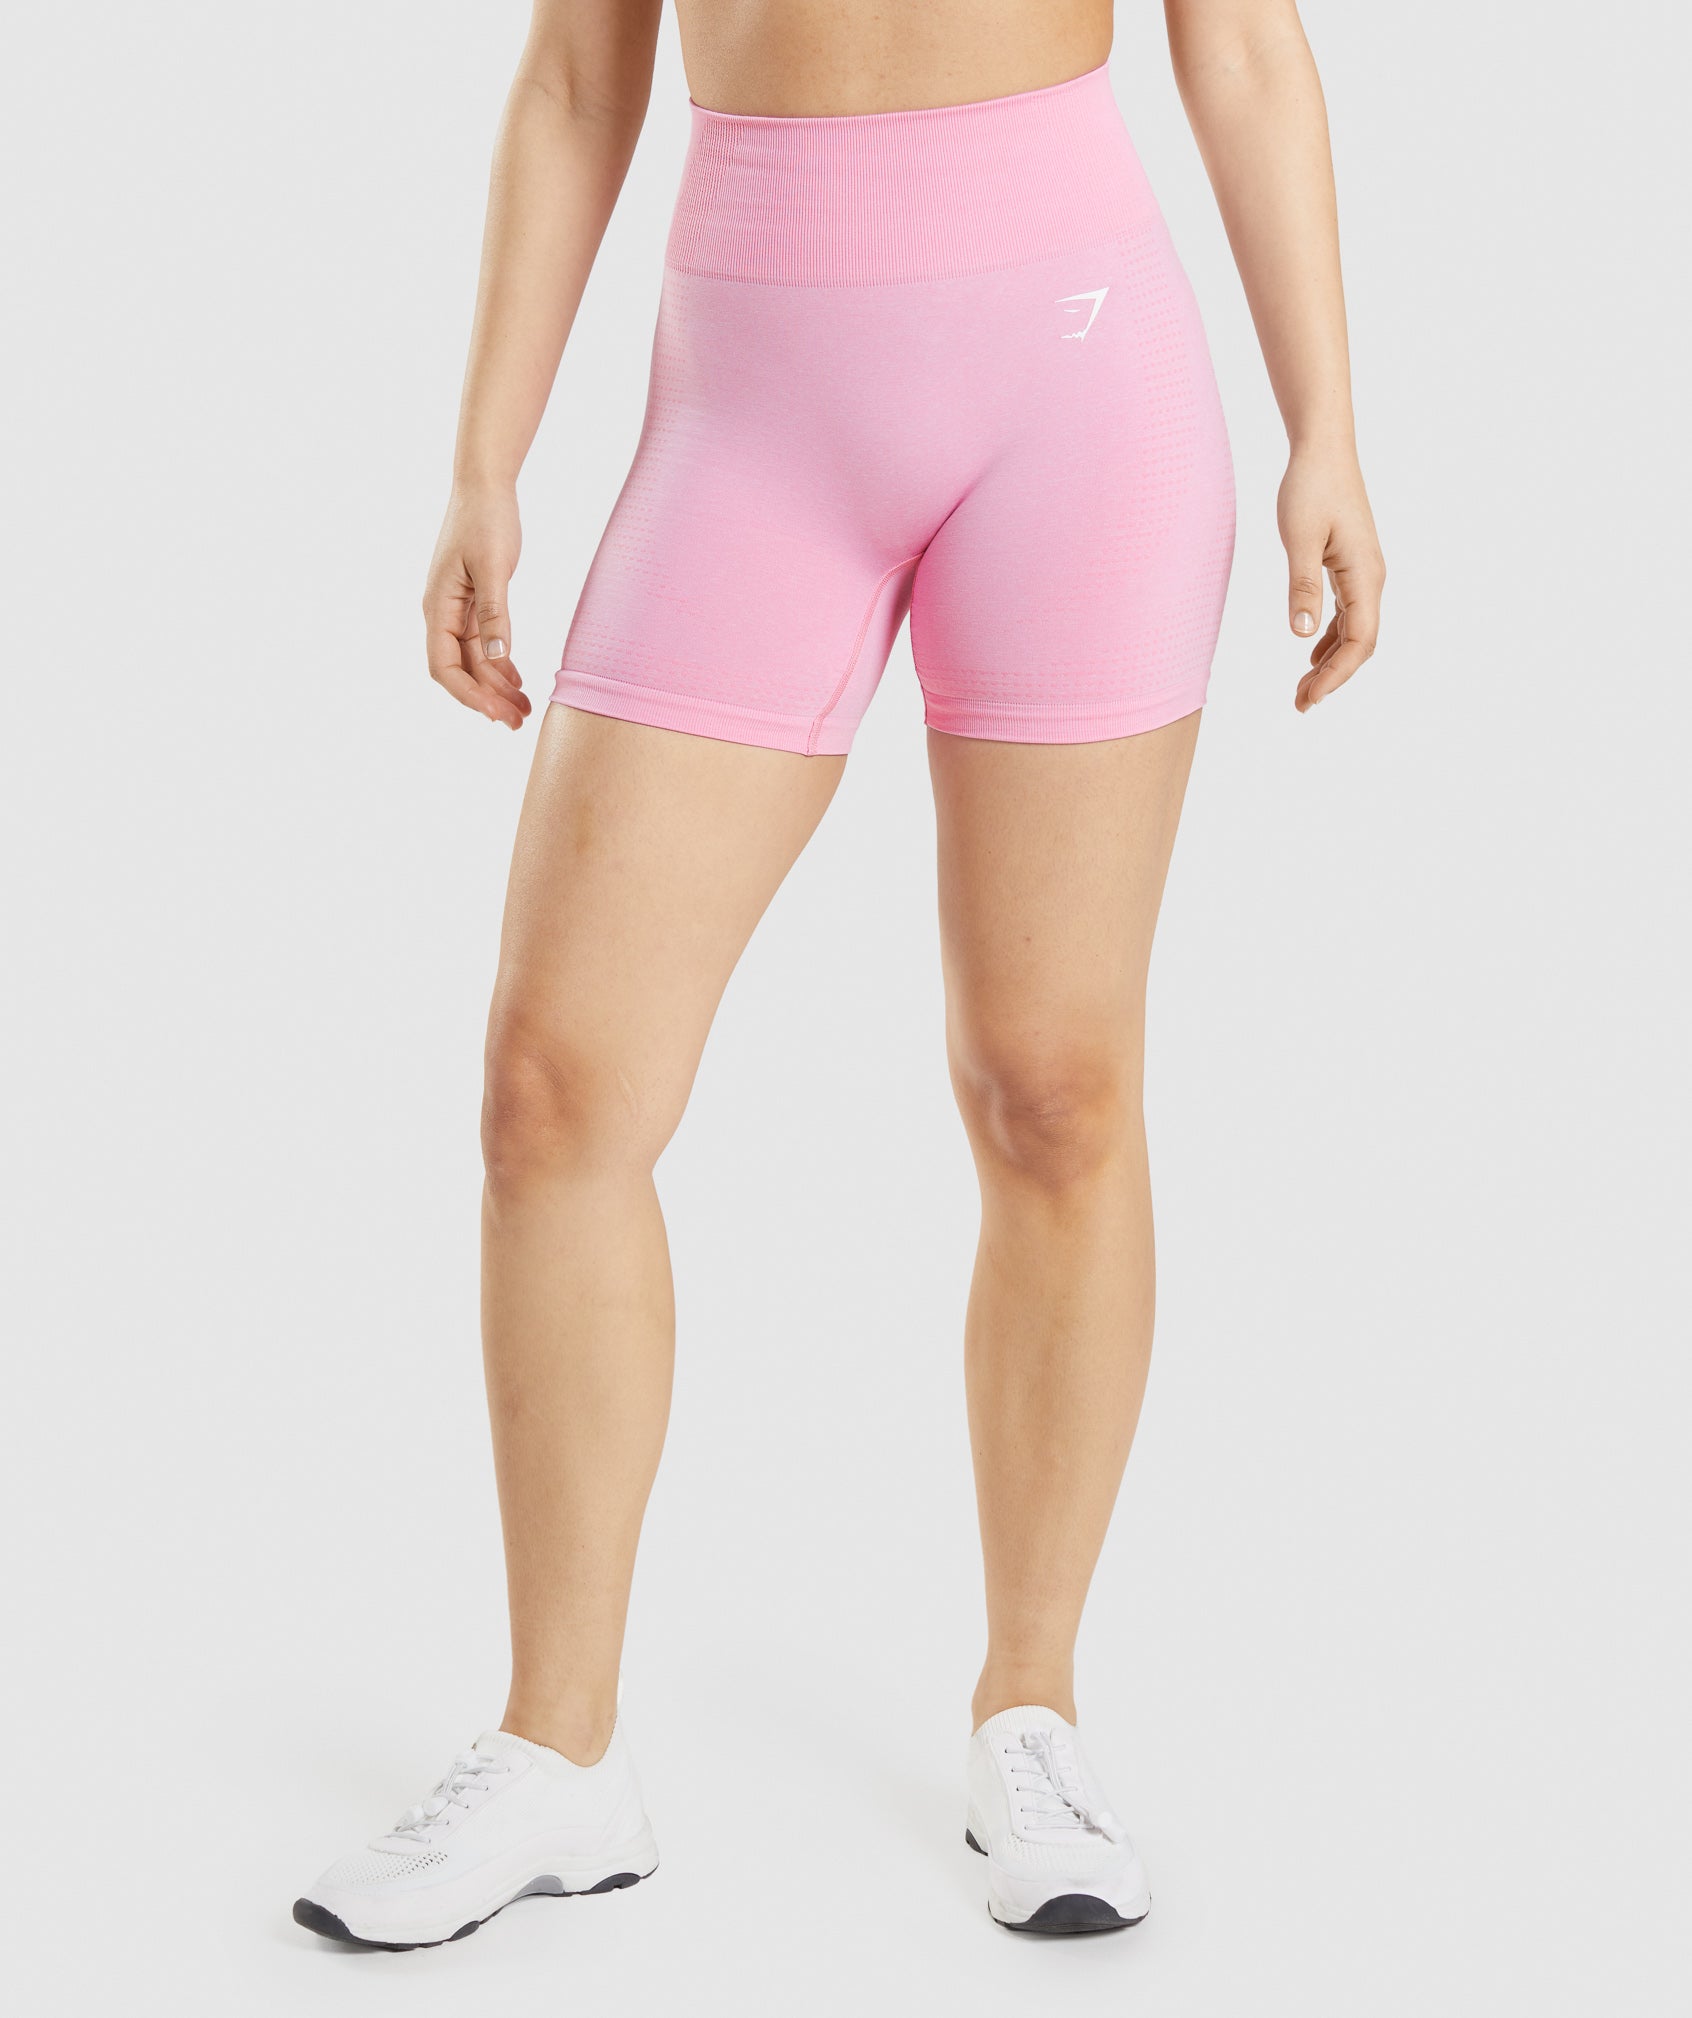 Vital Seamless 2.0 Shorts in Sorbet Pink Marl